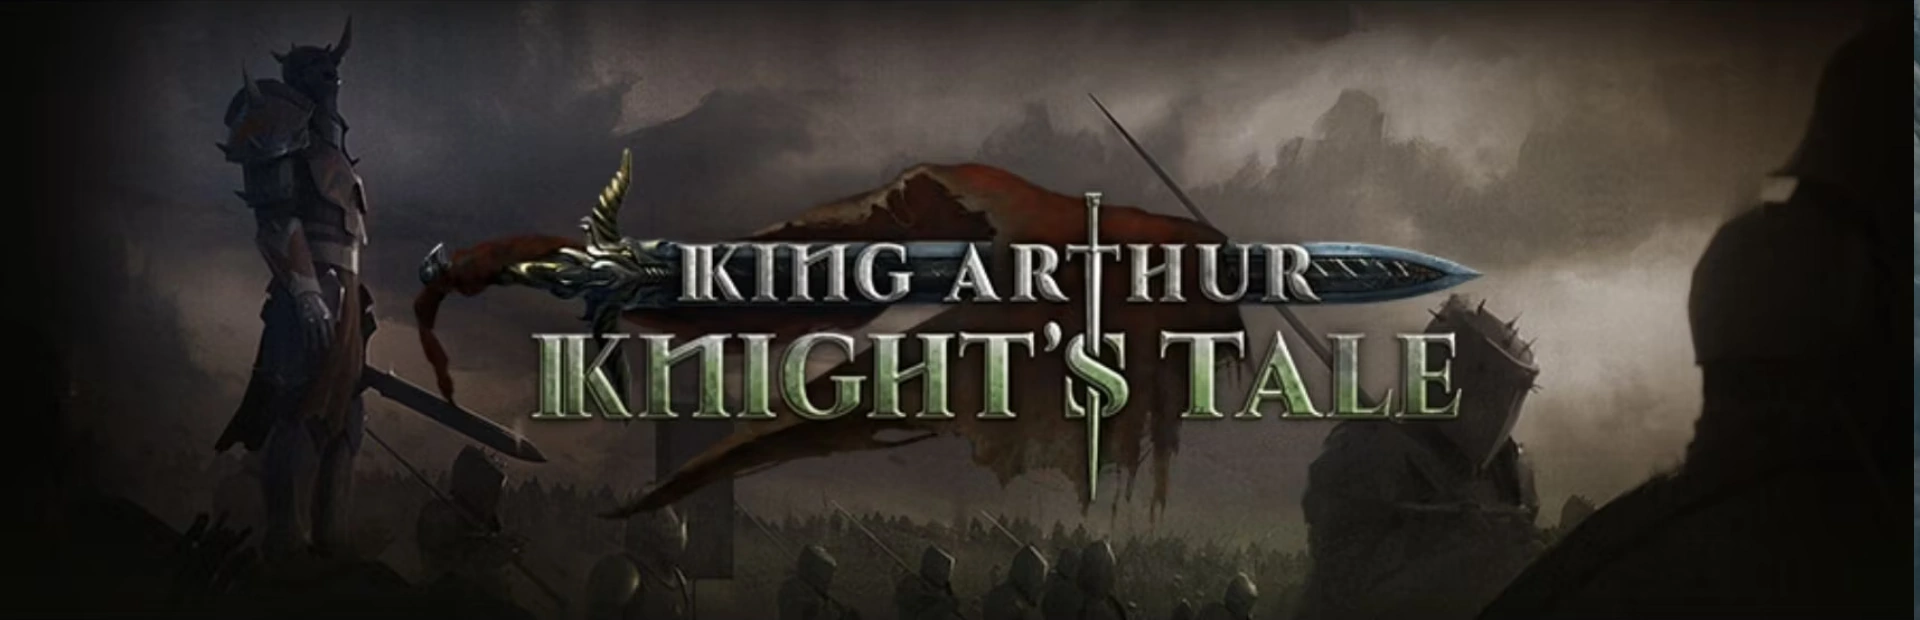 KING ARTHUR KNIGHTS TALE.banner2